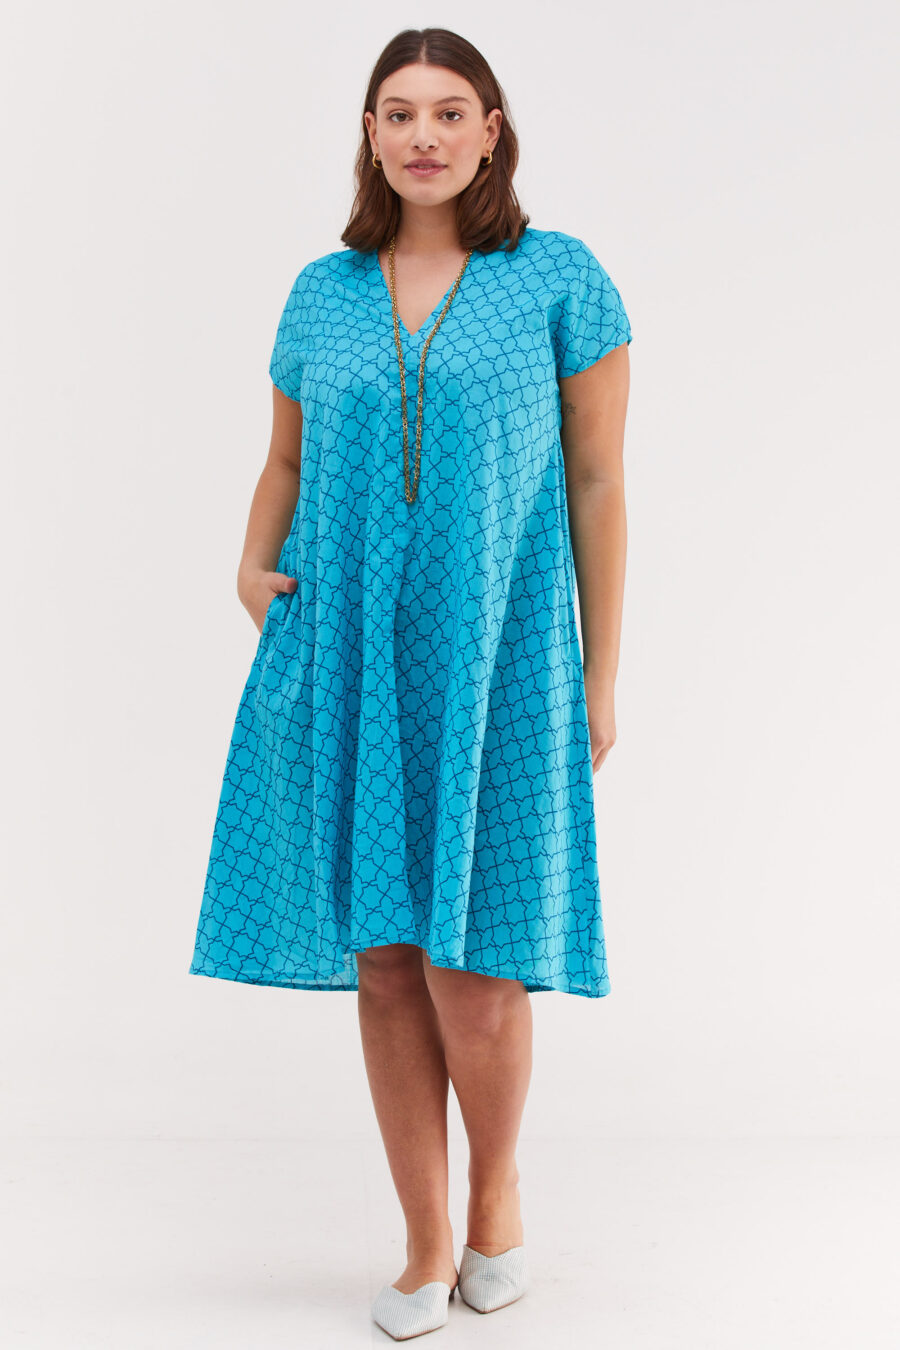 Joes dress | Uniquely designed midi oversize dress - Tourqouise Scandinavian print, tourqouise dress with dark blue geometric print by comfort zone boutique